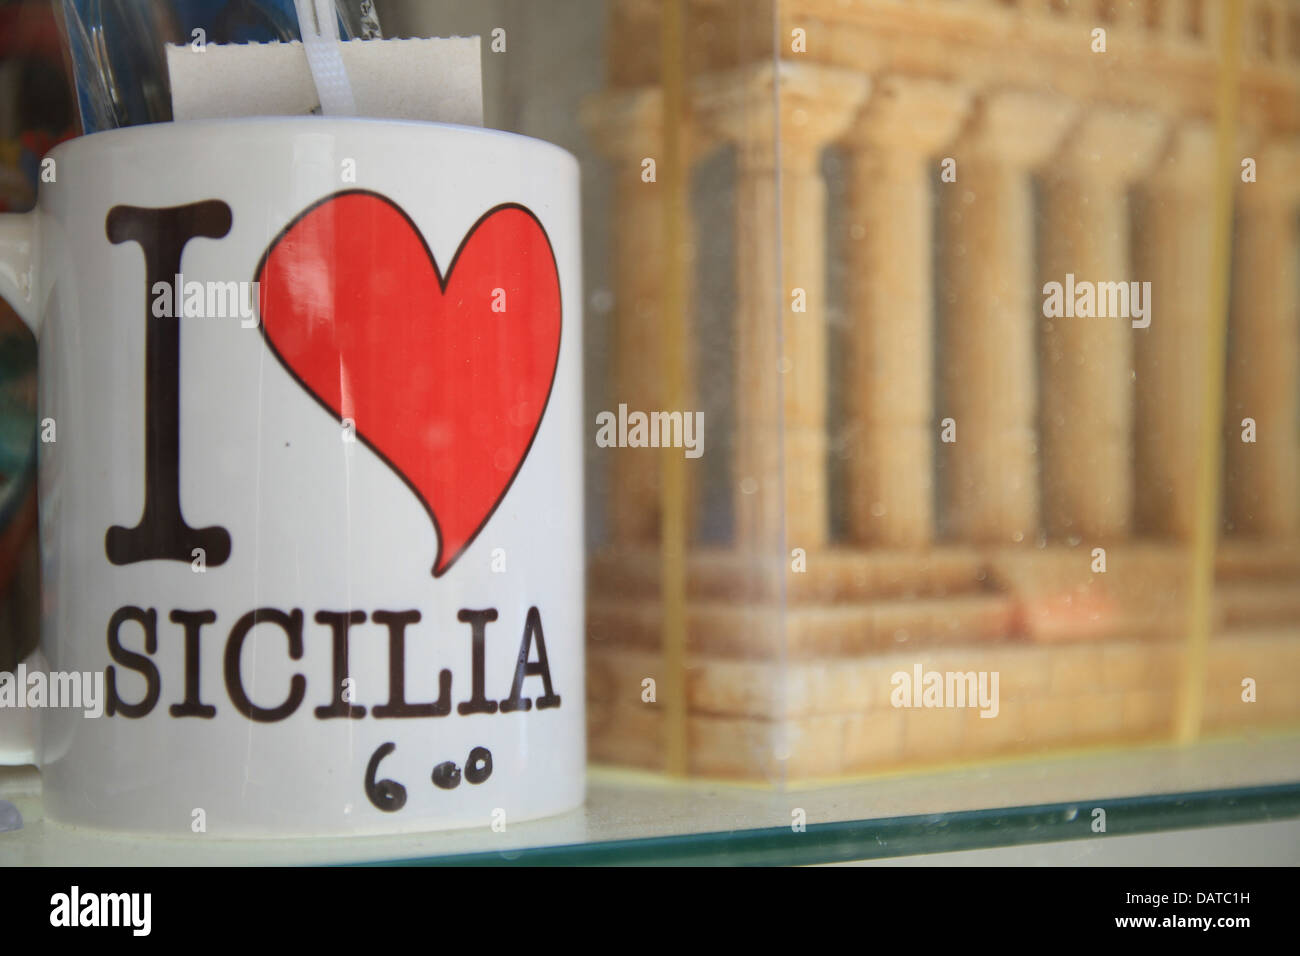 Sicilia - Sicily Italy Vintage Travel Coffee Mug by Yesteryears